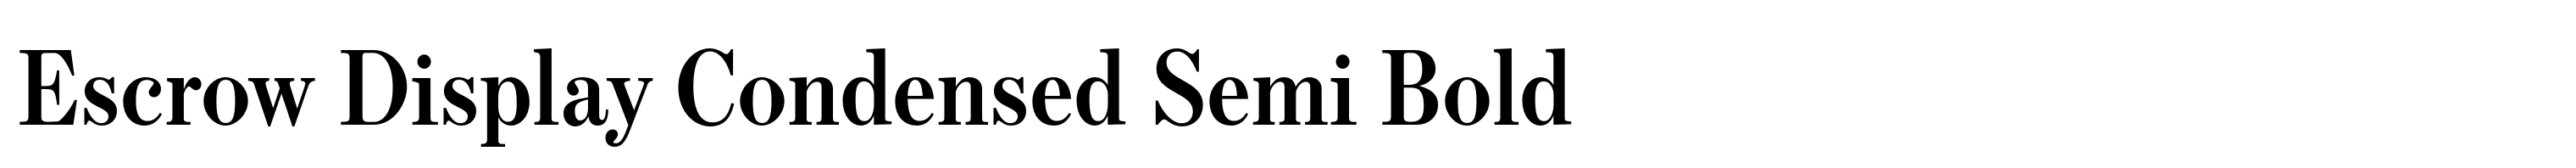 Escrow Display Condensed Semi Bold